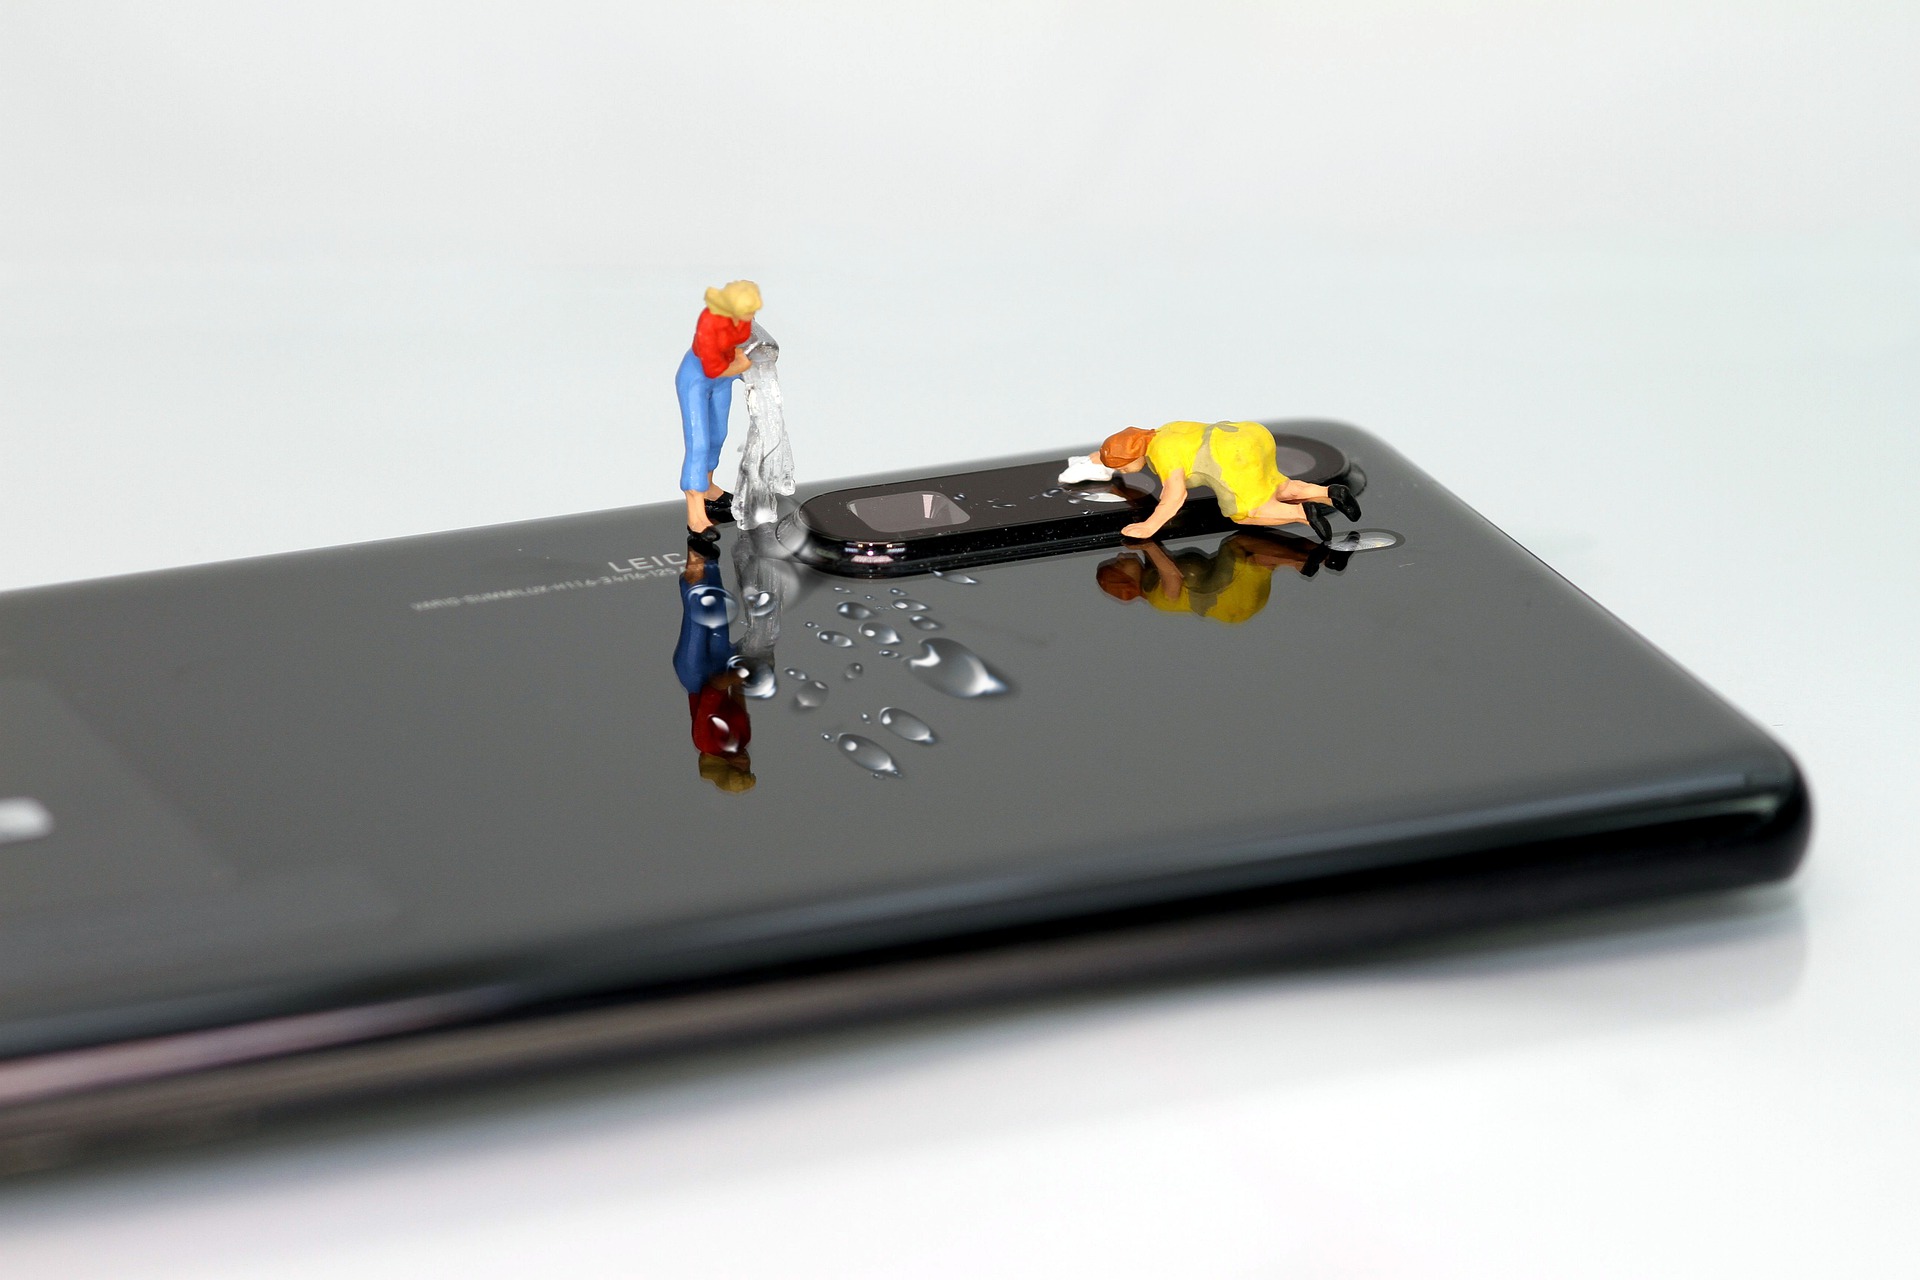 Cómo desinfectar tu celular sin descomponerlo, según Apple